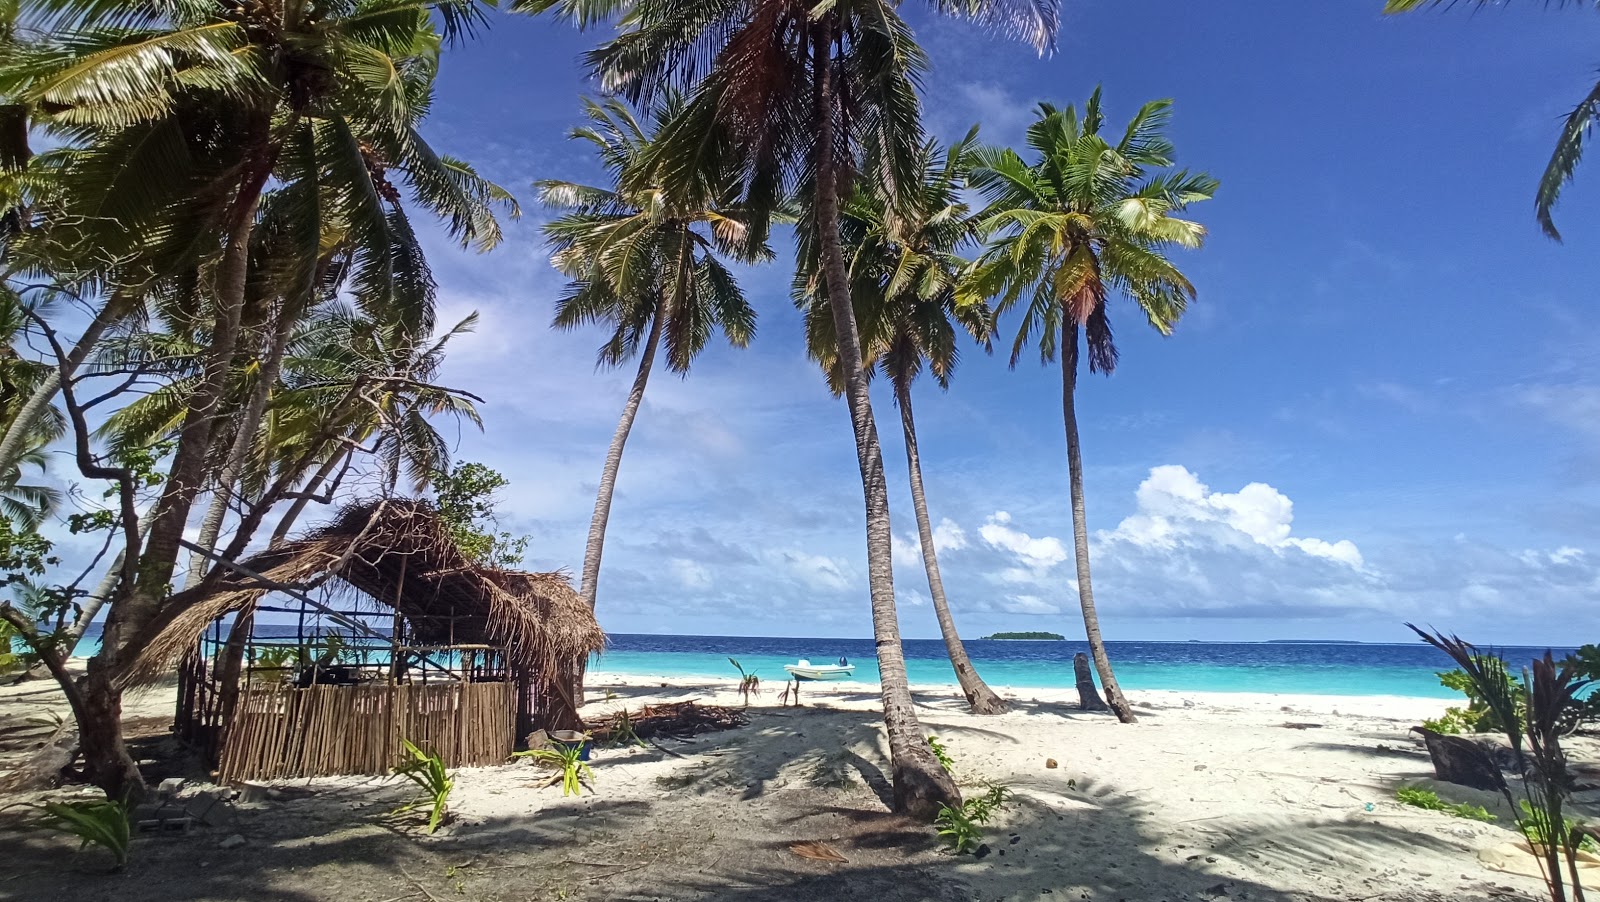 Foto de Faruhulhudhoo Beach - lugar popular entre os apreciadores de relaxamento